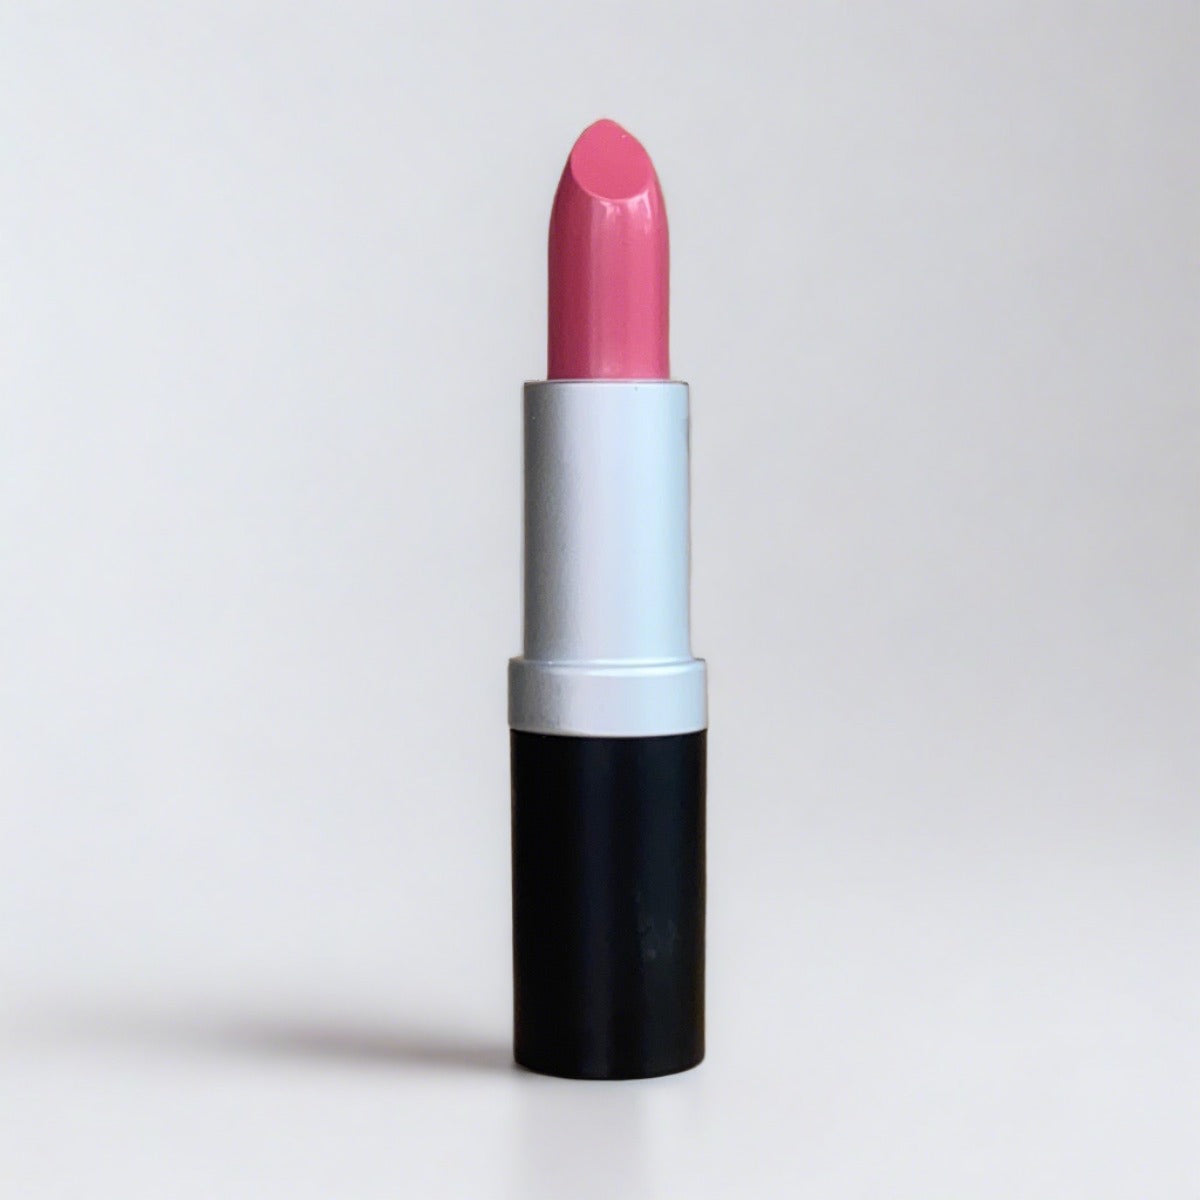 Nautilus Moisturizing Lipstick for color and shine